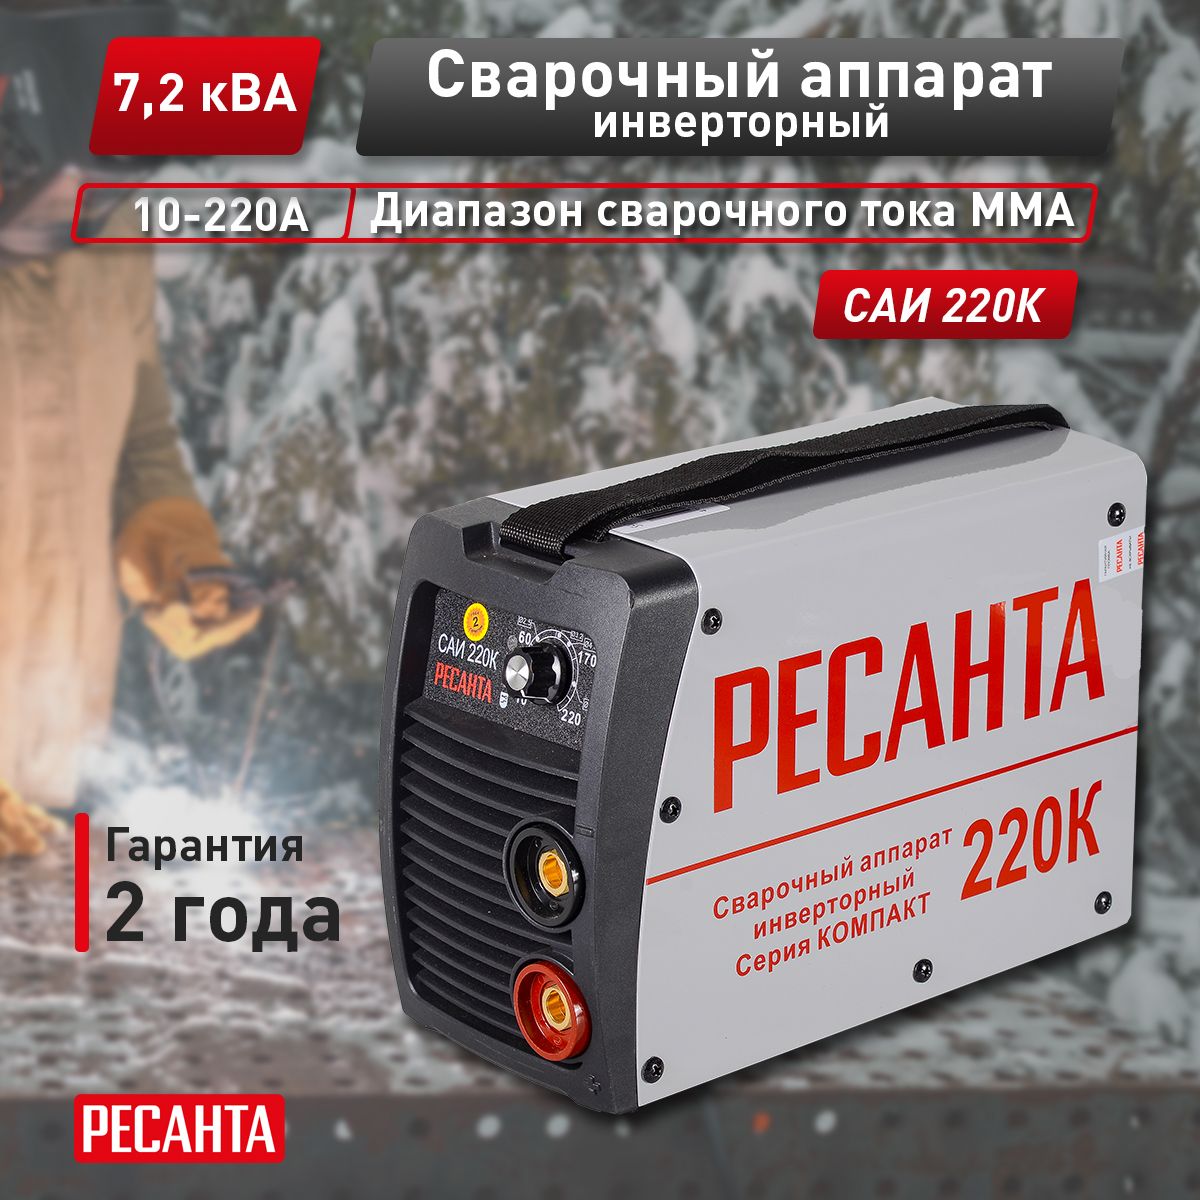 СварочныйаппаратРесантаСАИ220К(компакт),220ампер,комплекткабелей